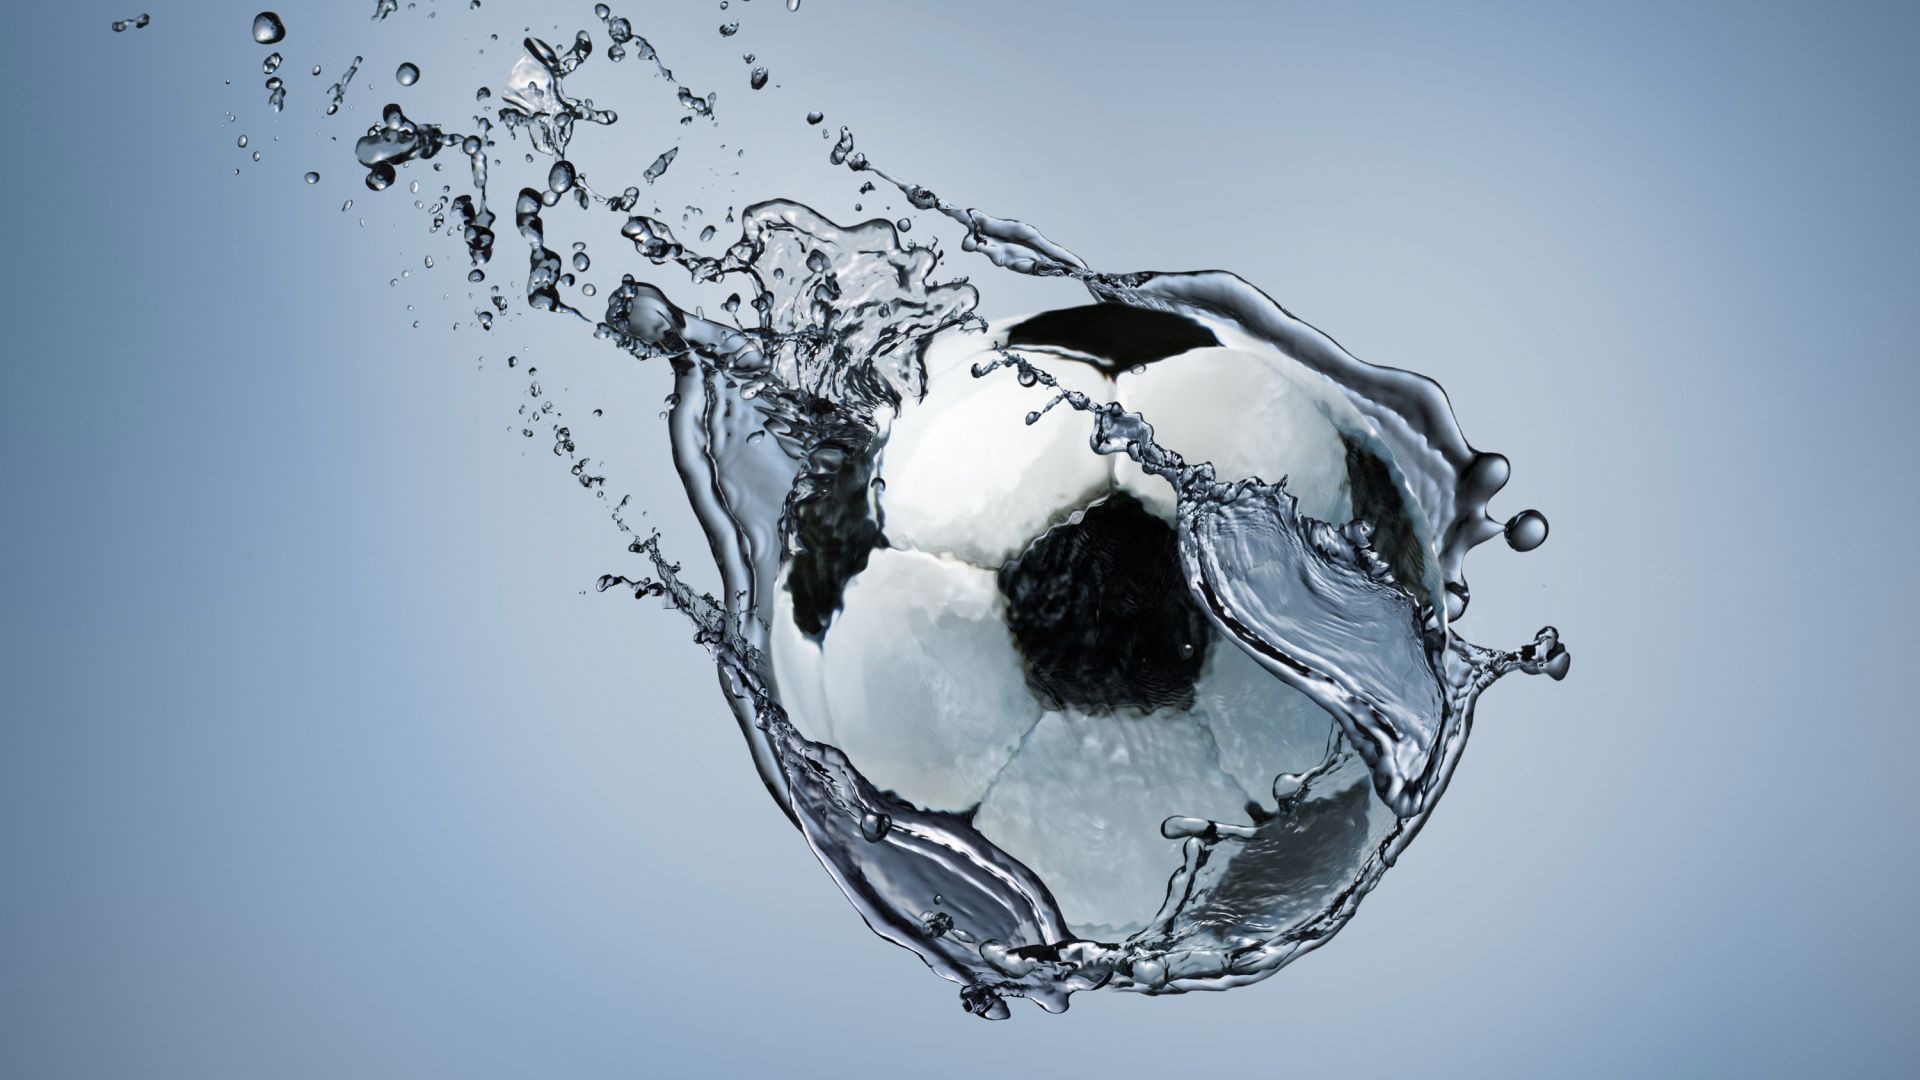 Wallpaper Football water splash